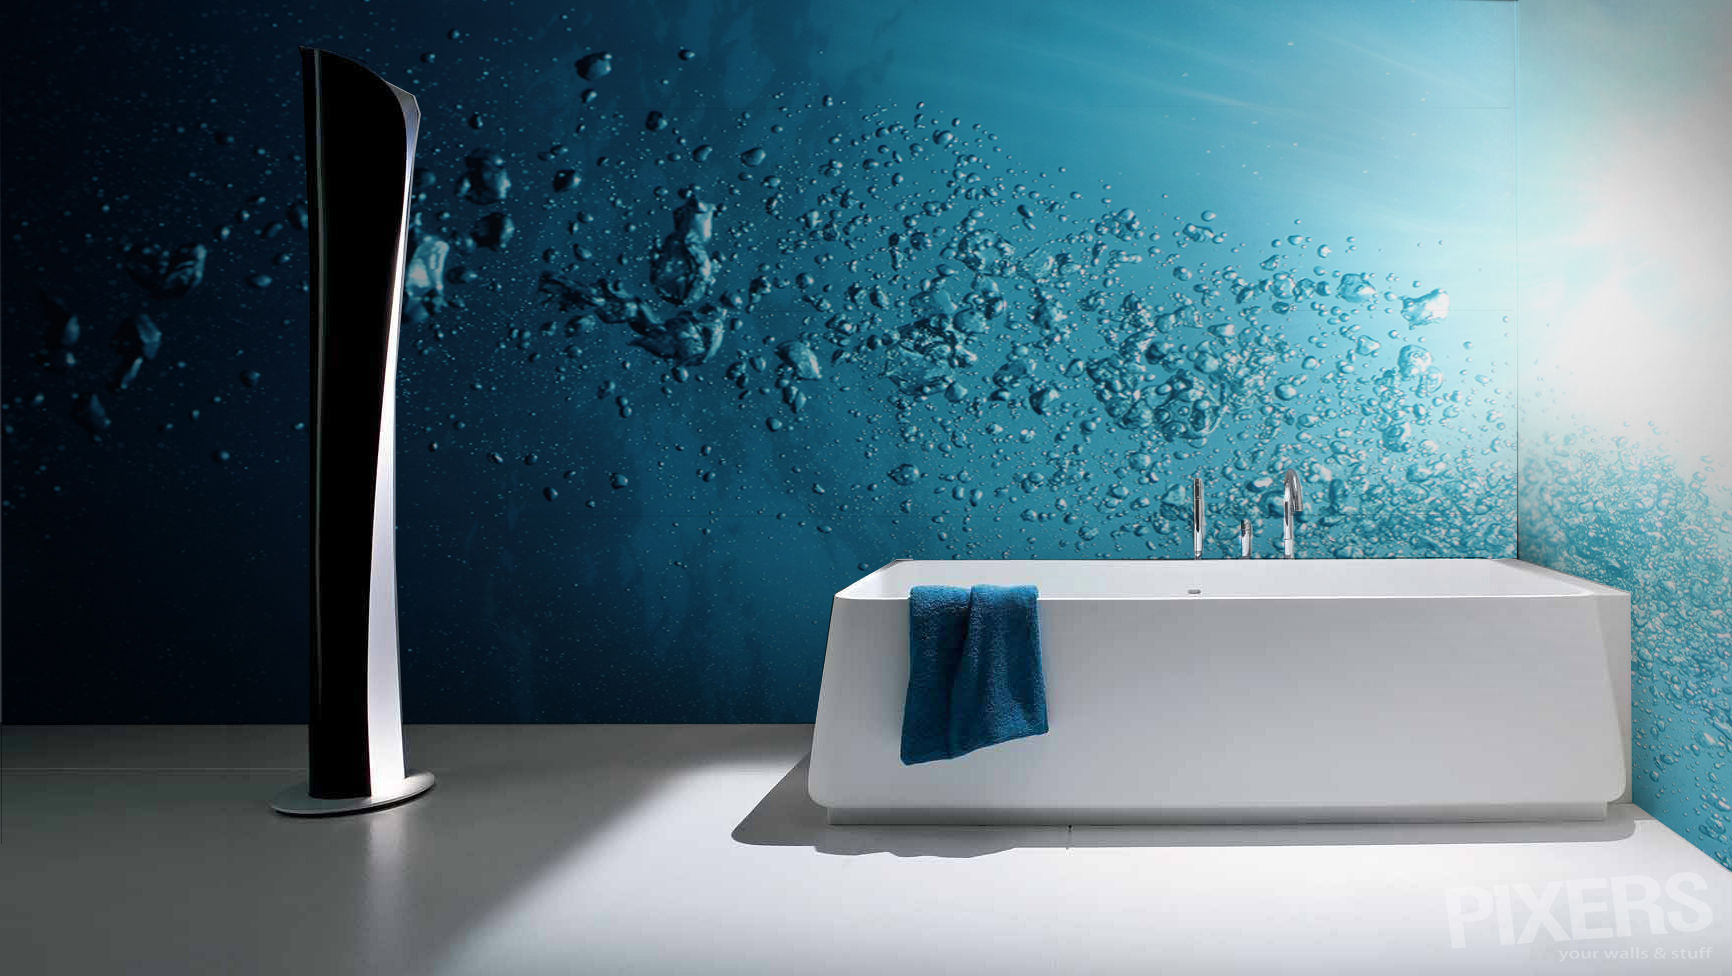 Undersea Pixers Modern style bathrooms water,bubbles,wall mural,wallpaper